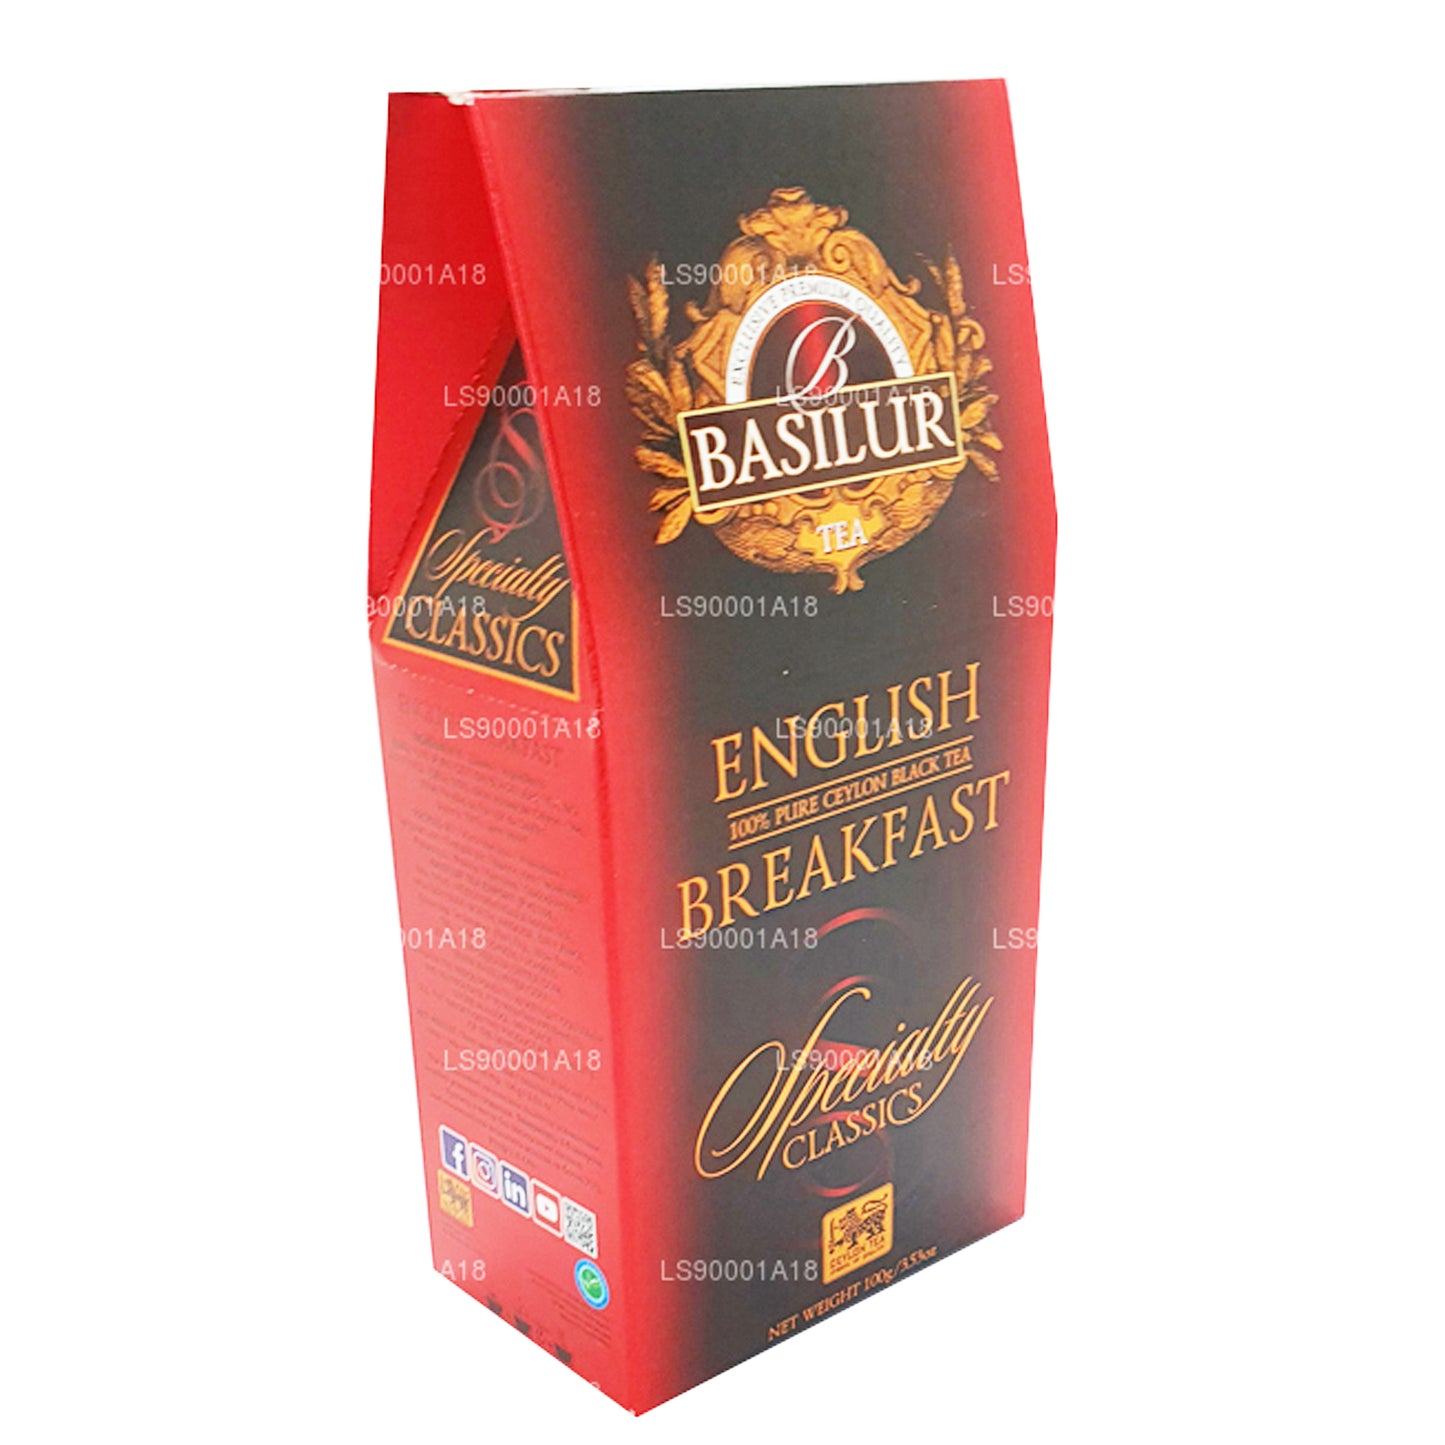 Basilur Specialty Classics engelsk frukost (100g)